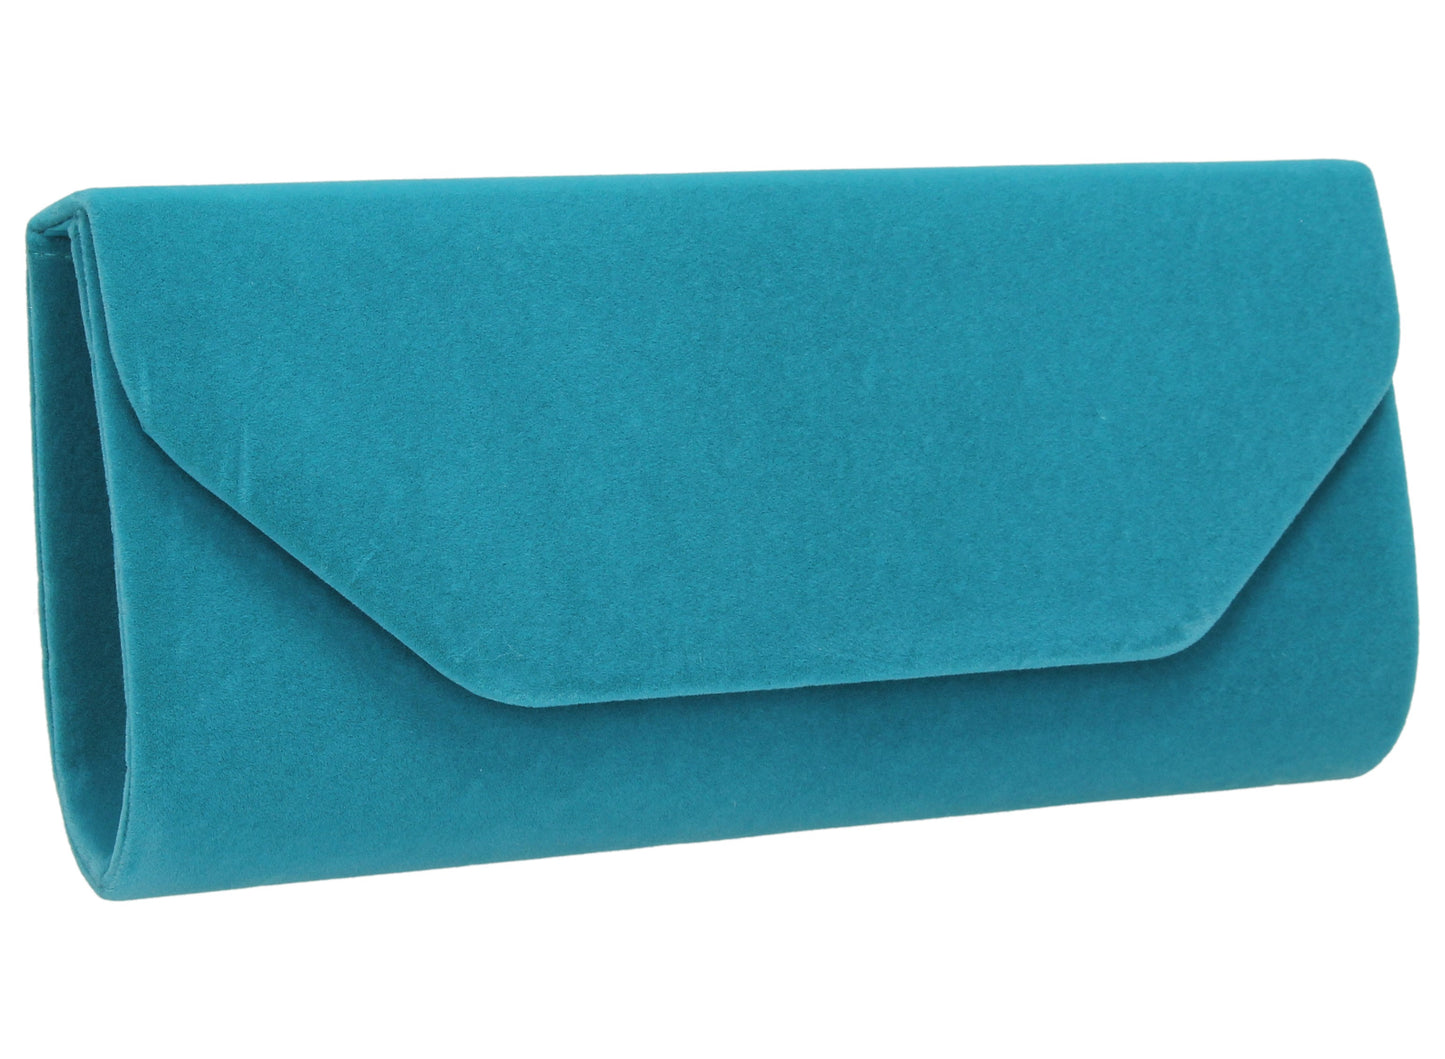 SWANKYSWANS Isabella Velvet Clutch Bag Light Blue Cute Cheap Clutch Bag For Weddings School and Work